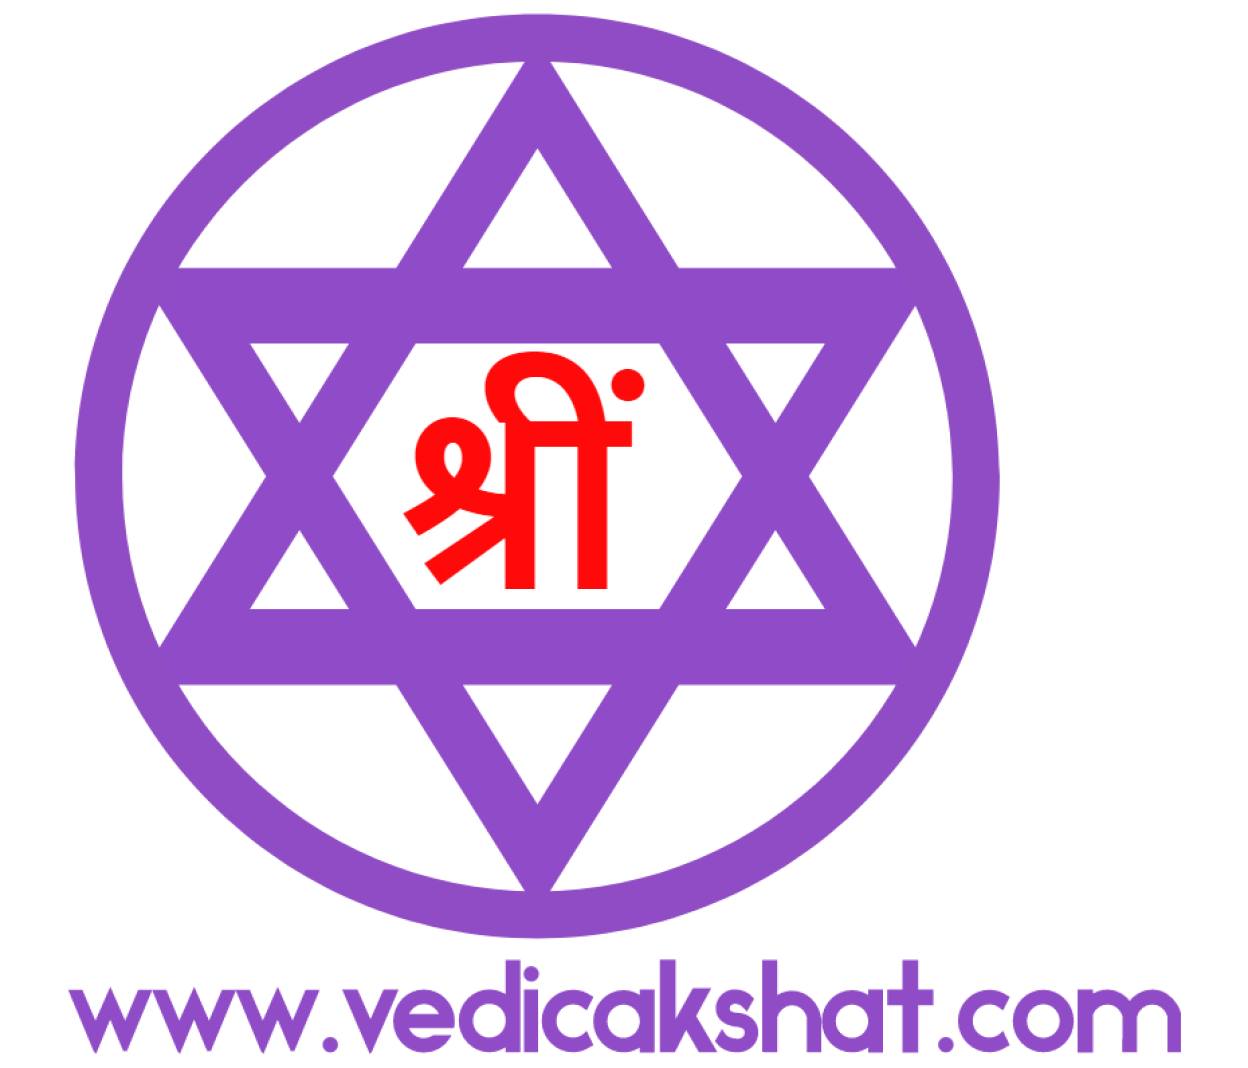 Vedic Akshat